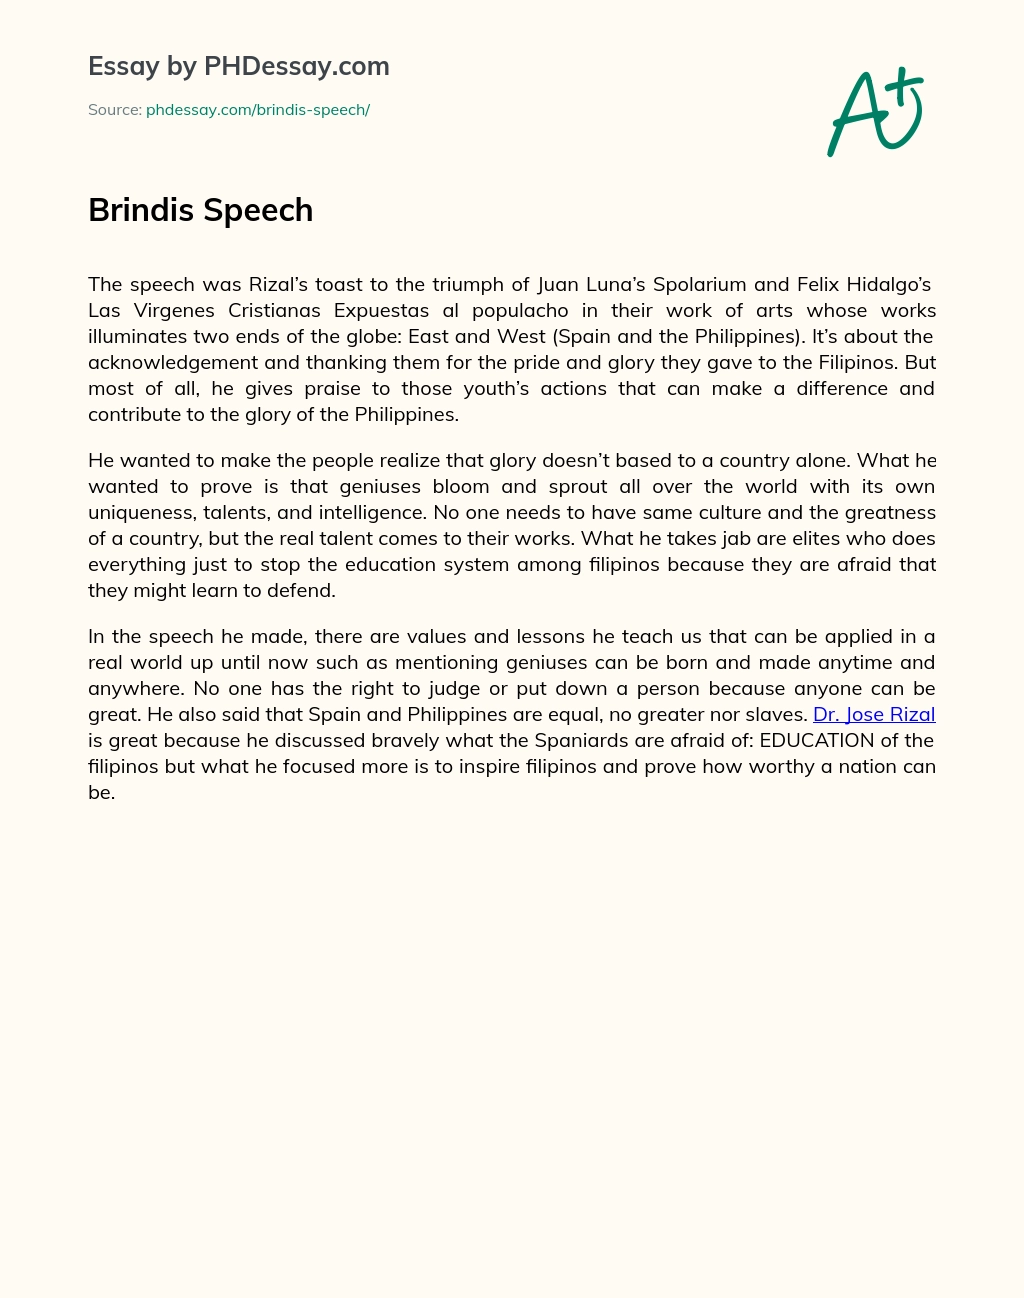 Brindis Speech essay